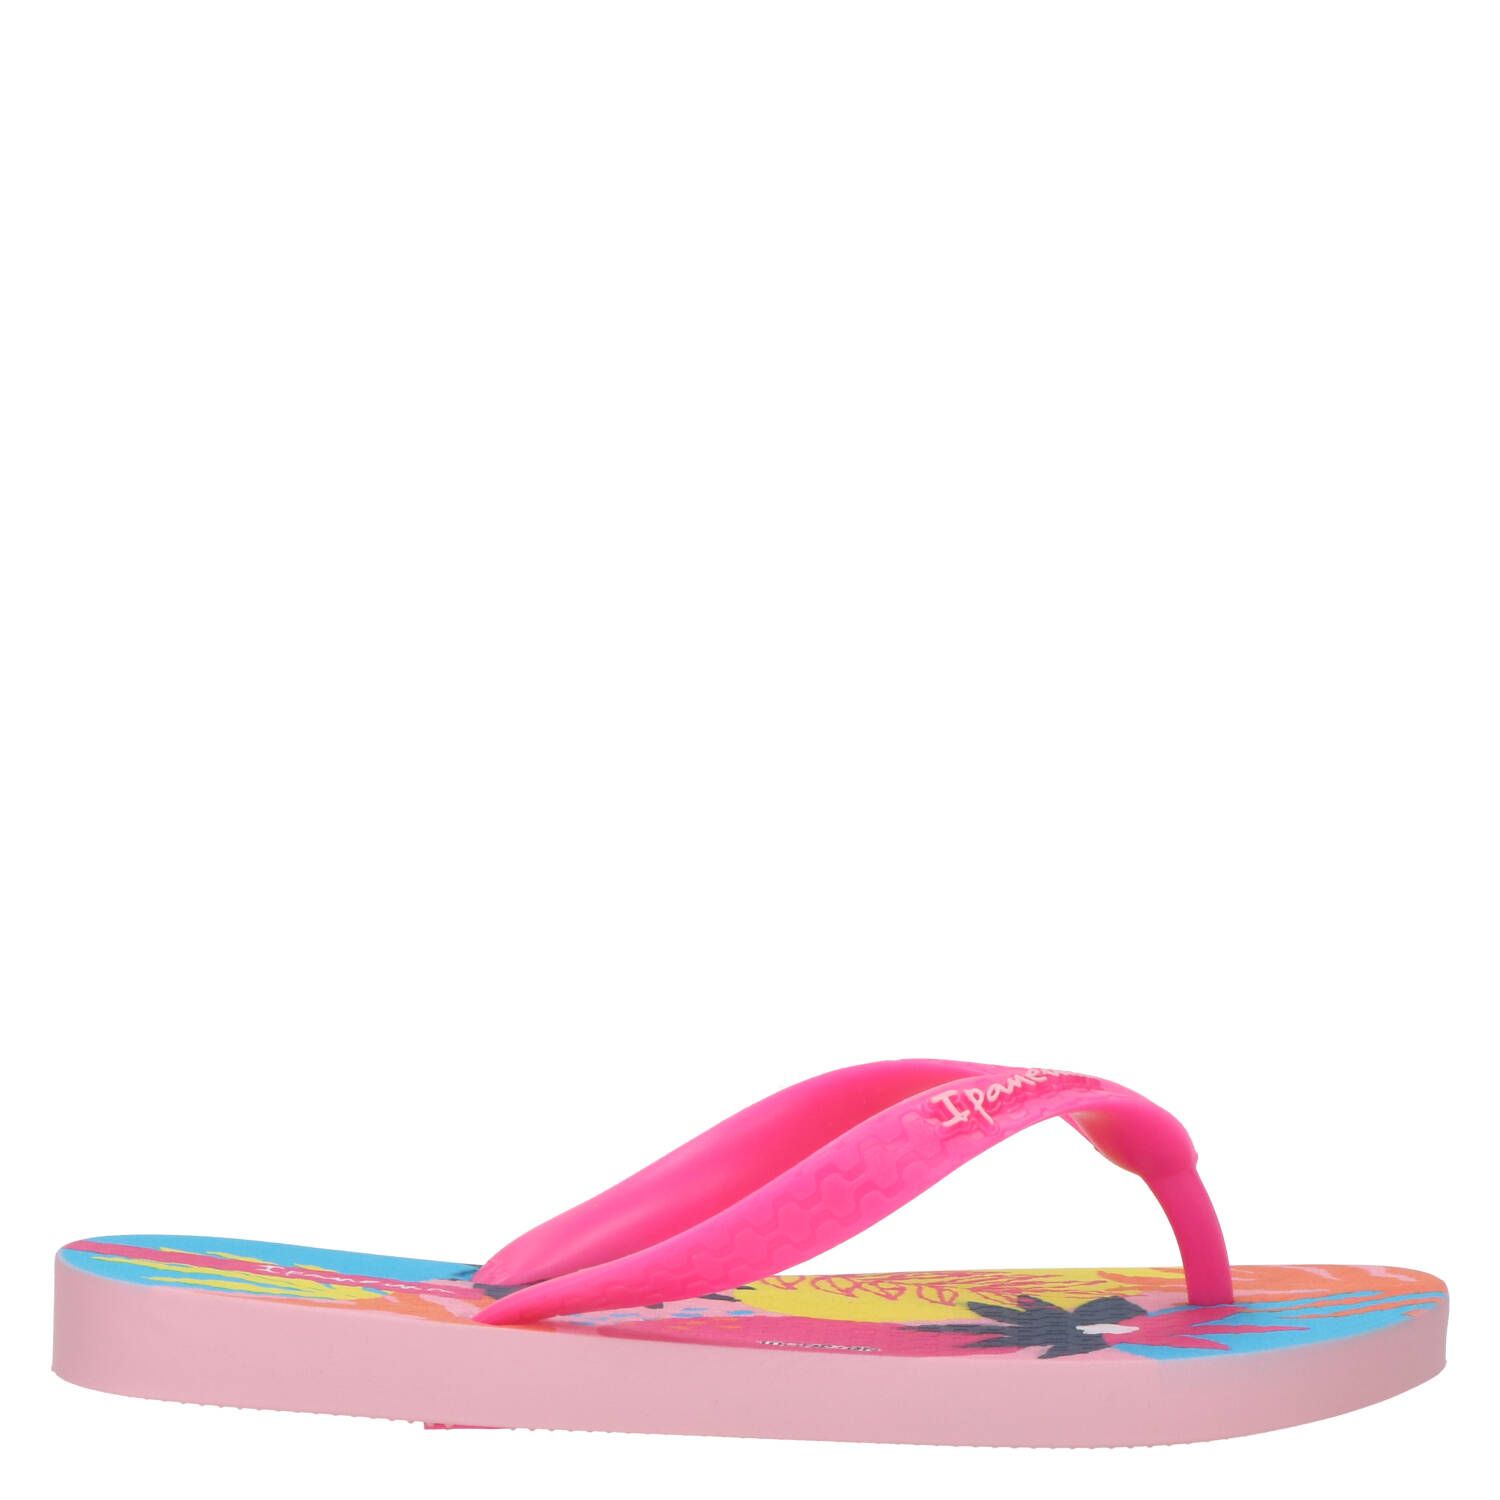 Ipanema Classic X slipper, Slippers, Meisje, Maat 37, roze/multi